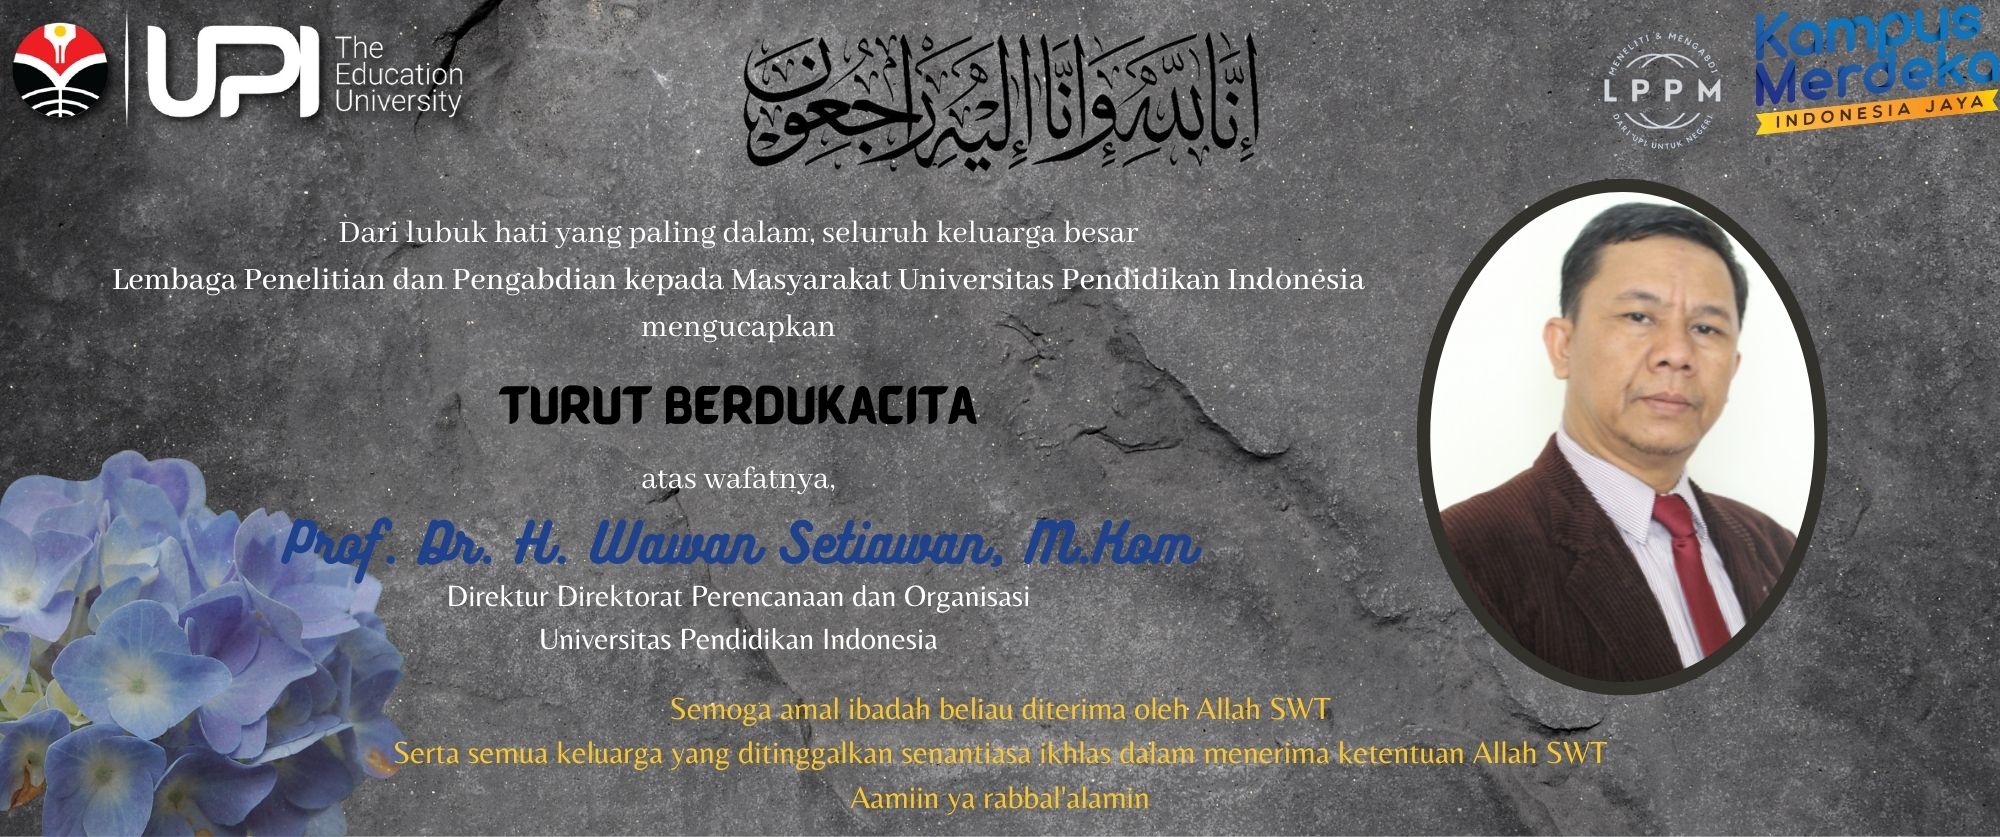 Berita duka Prof. Dr. H. Wawan Setiawan, M.Kom